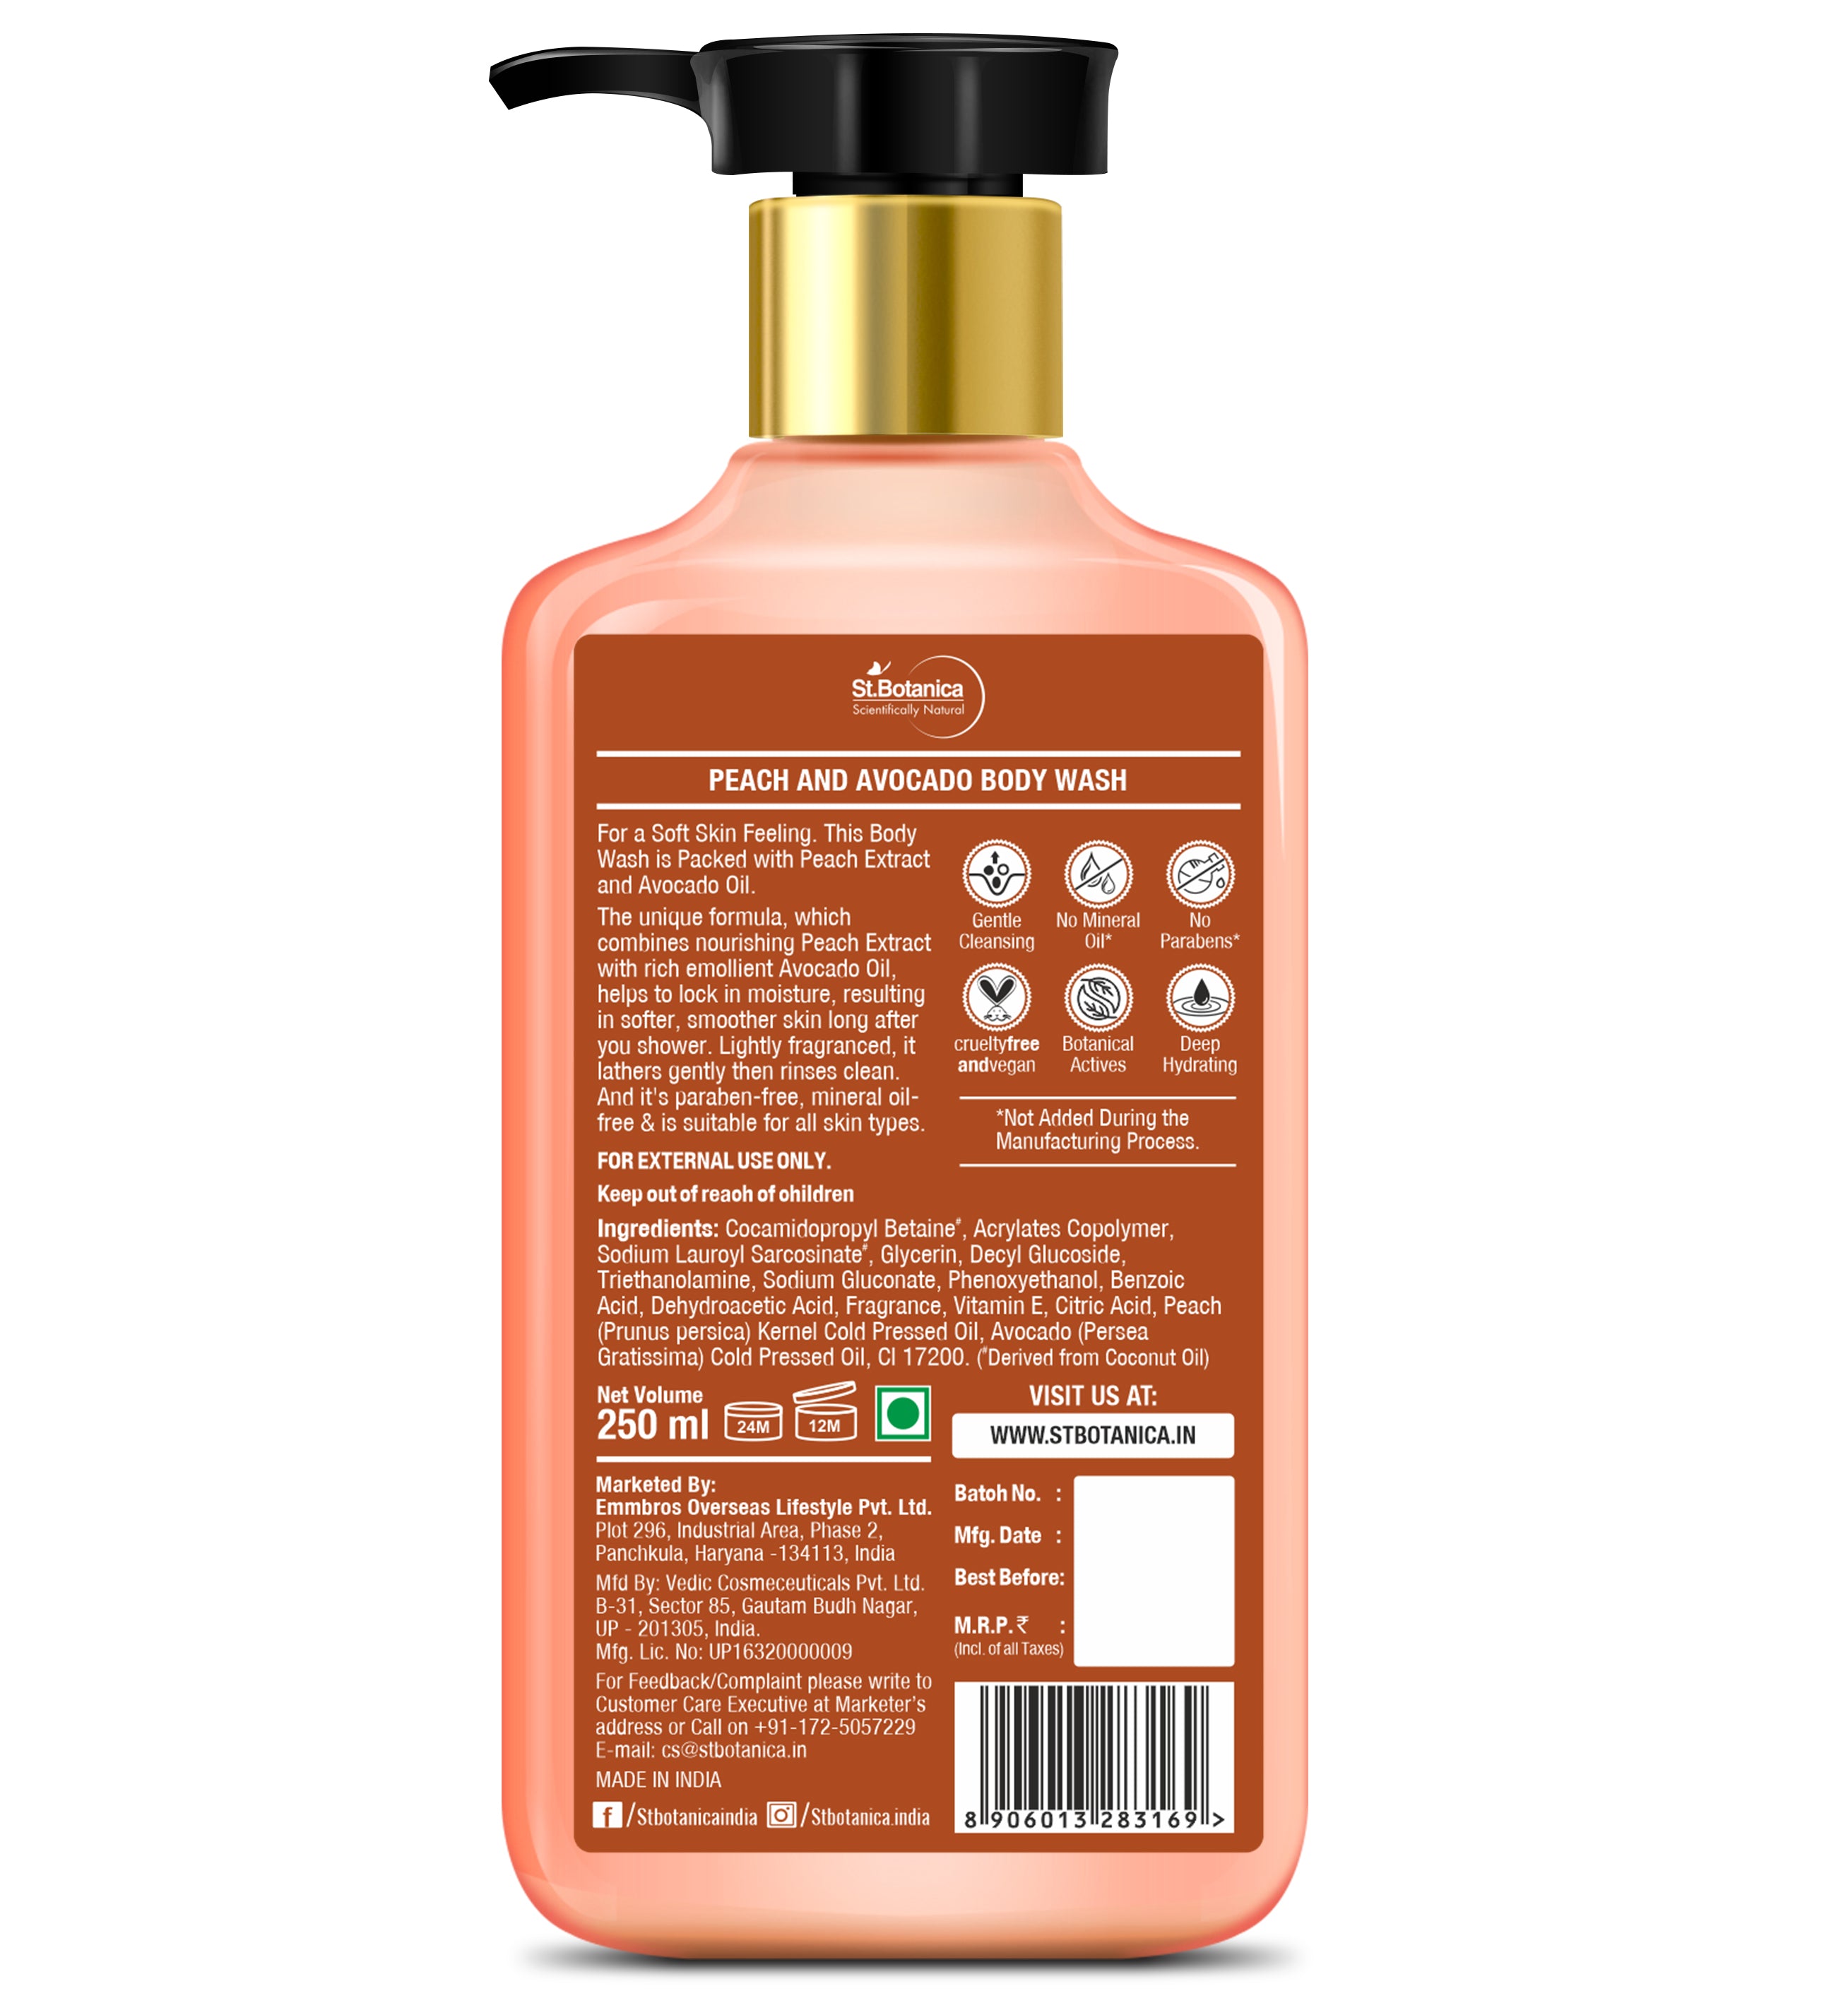 St.Botanica Peach & Avocado Body Wash - No Sls/Sulphate, Parabens, 250 ml